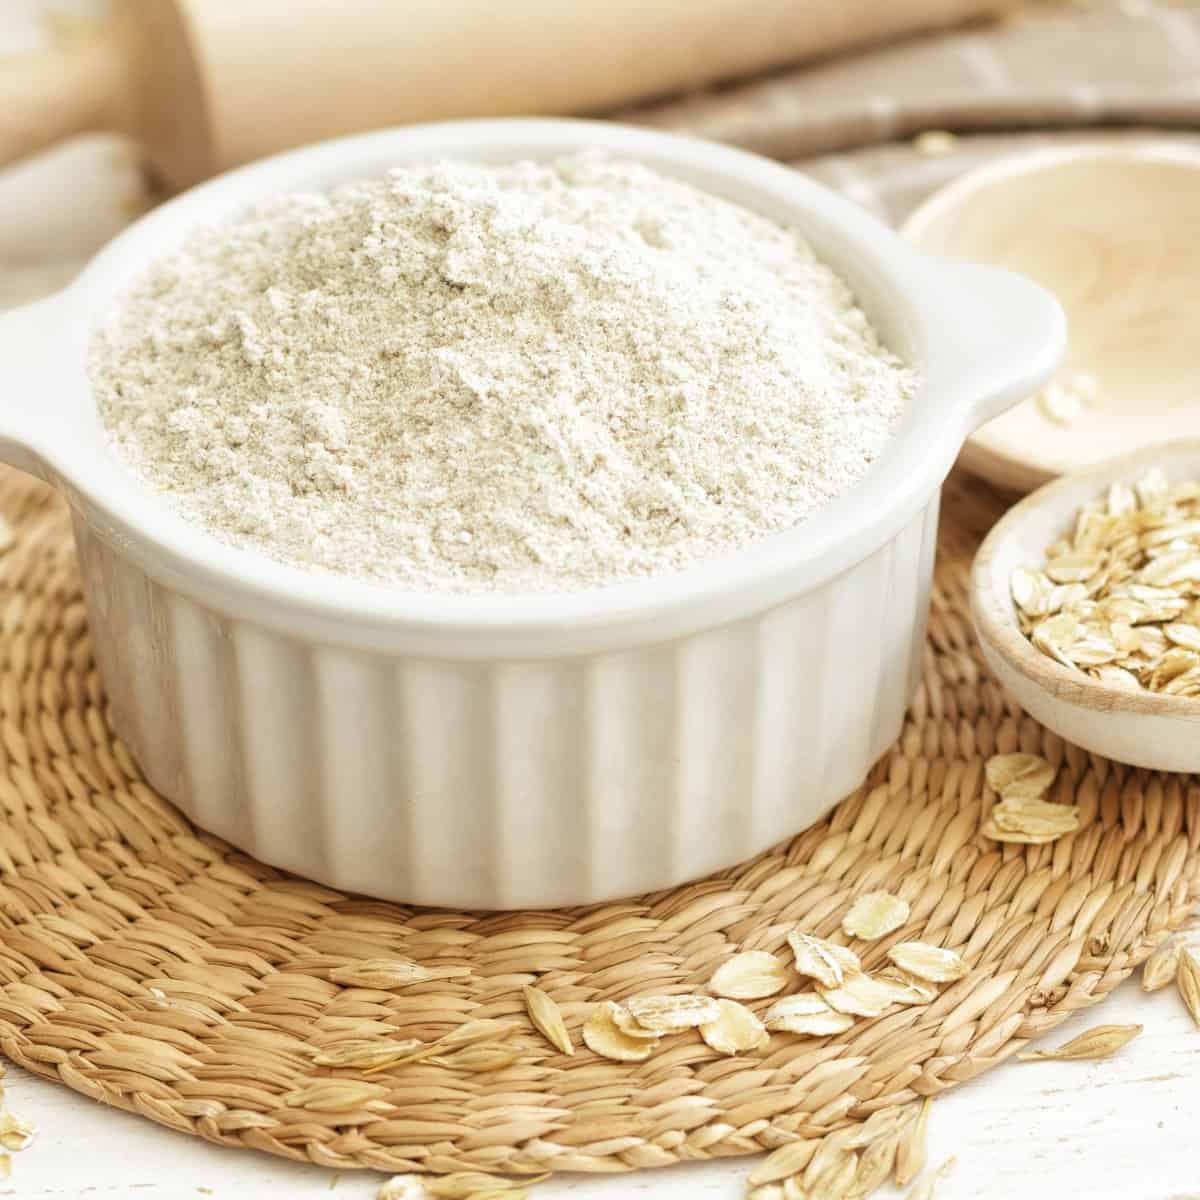 What is oat flour